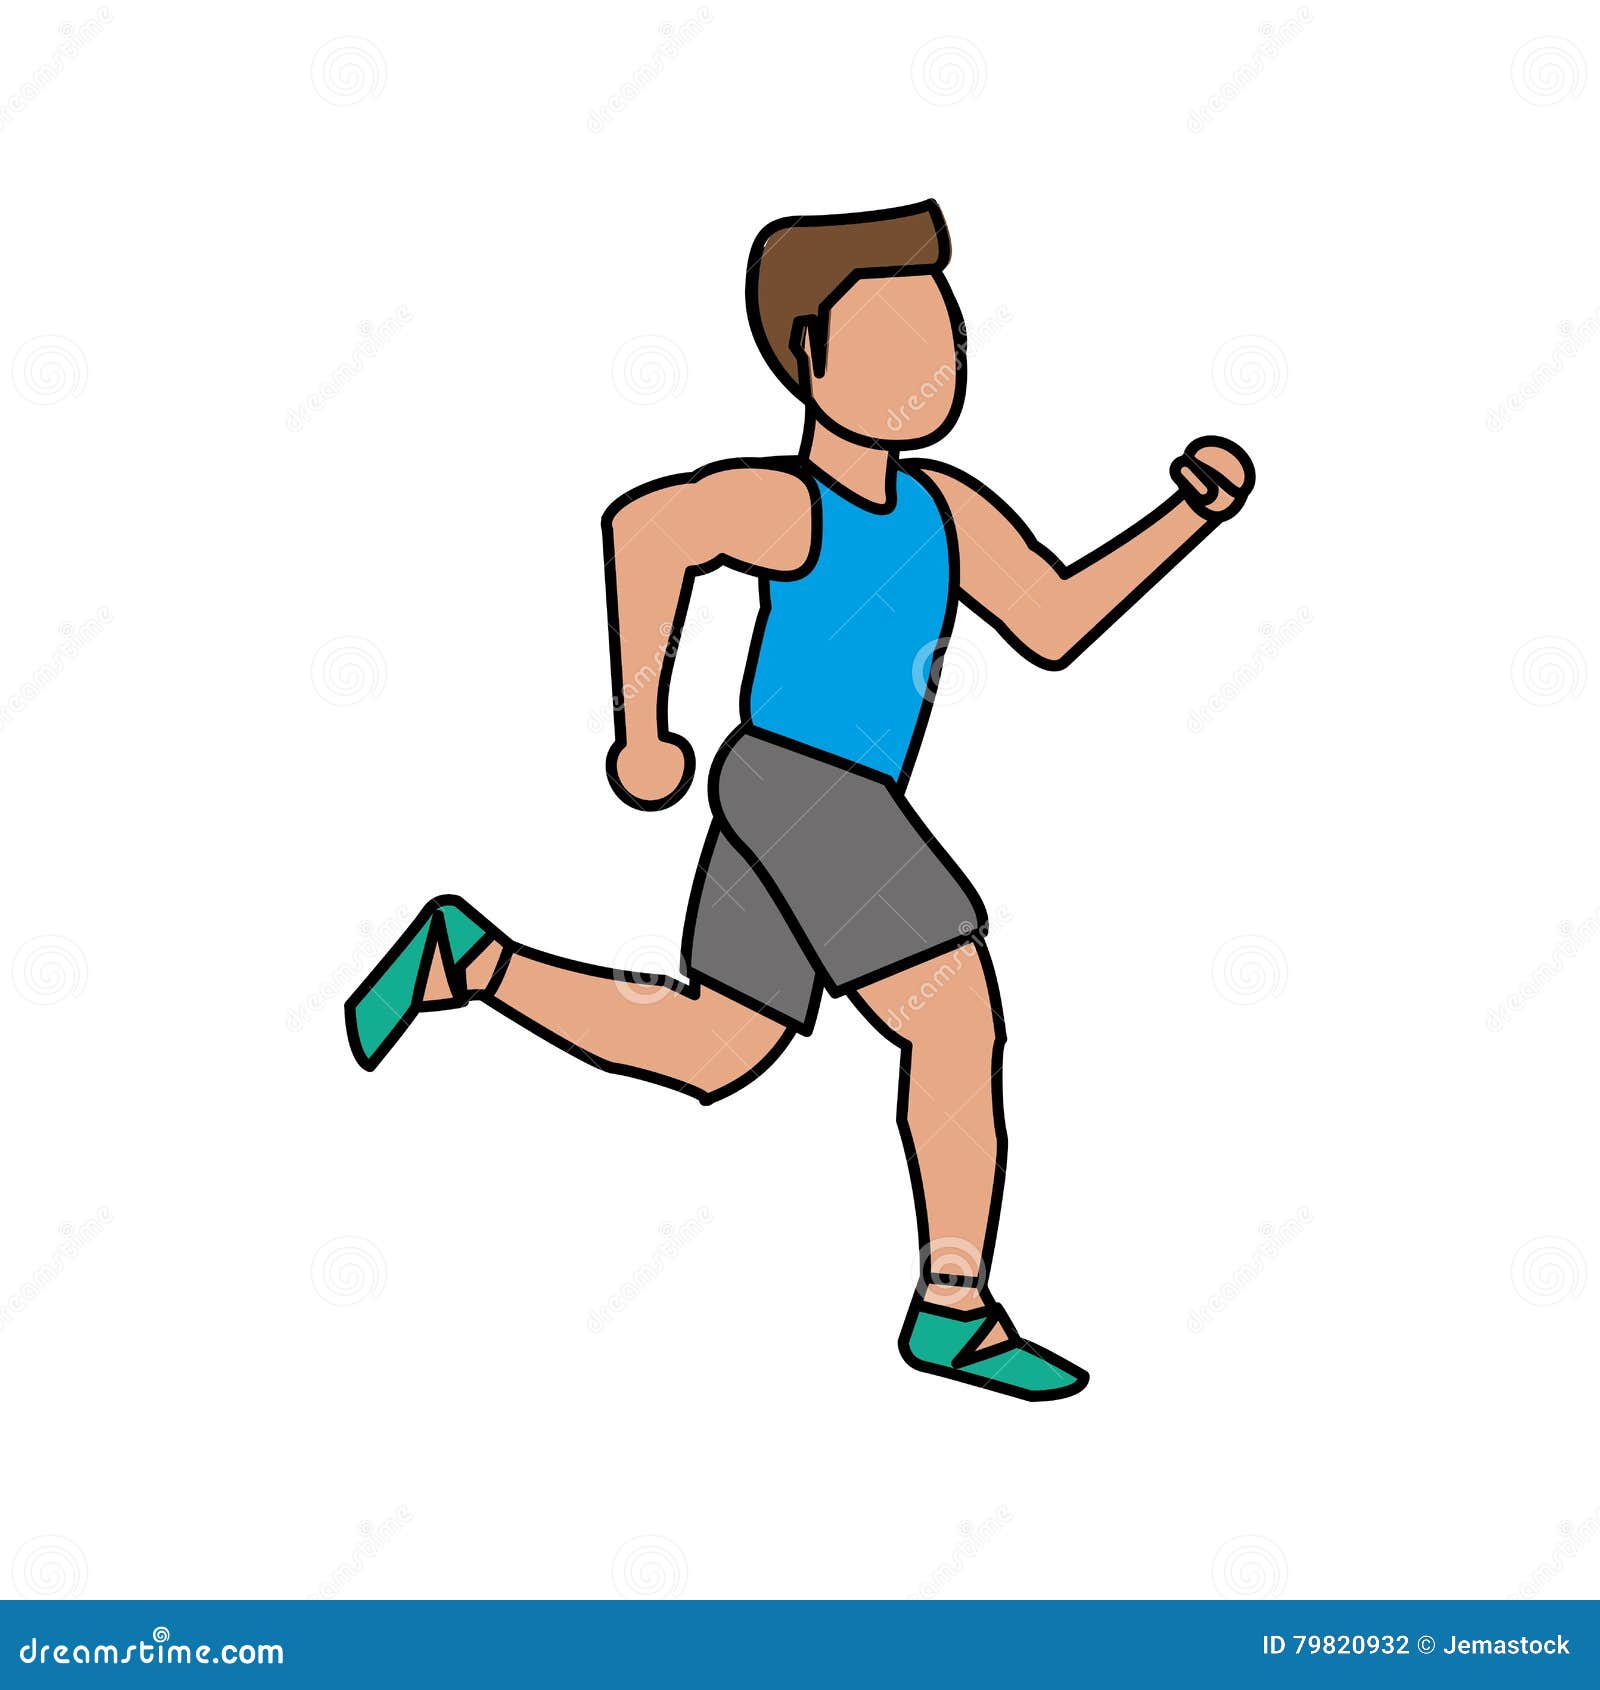 Isolated runner man design stock illustration. Illustration of activity ...